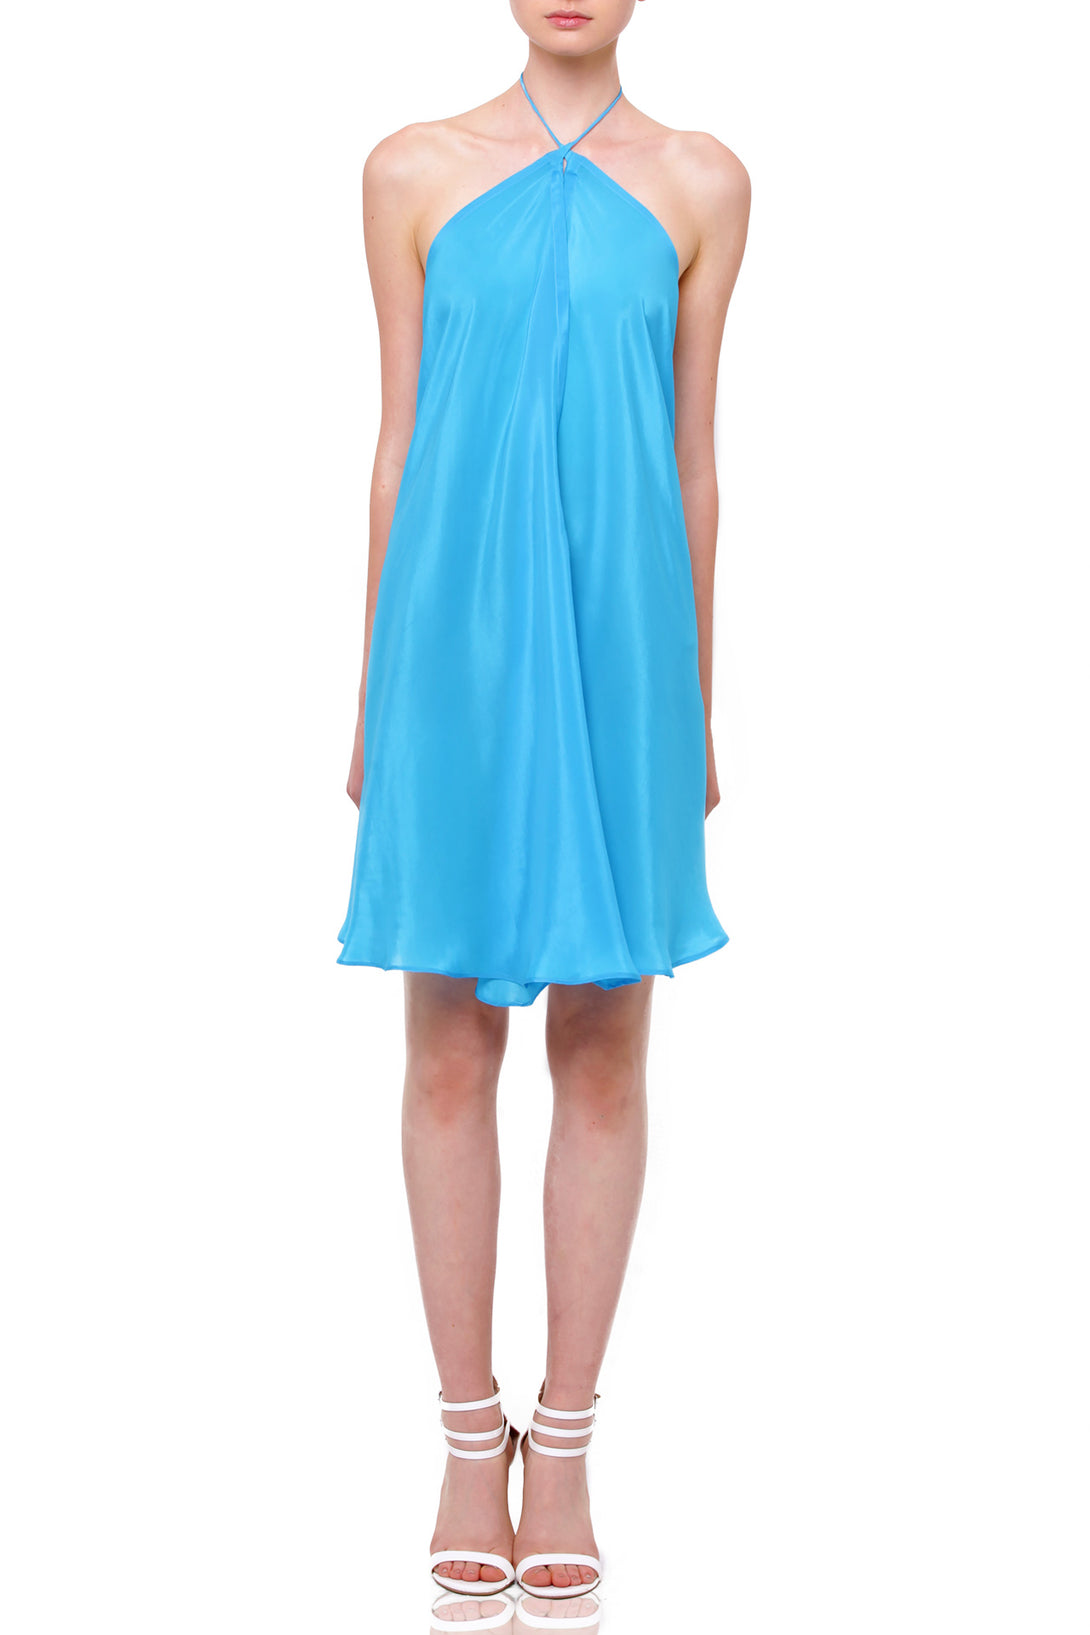  light blue mini dress, short frock for women party wear, Shahida Parides, sleeveless short dress,